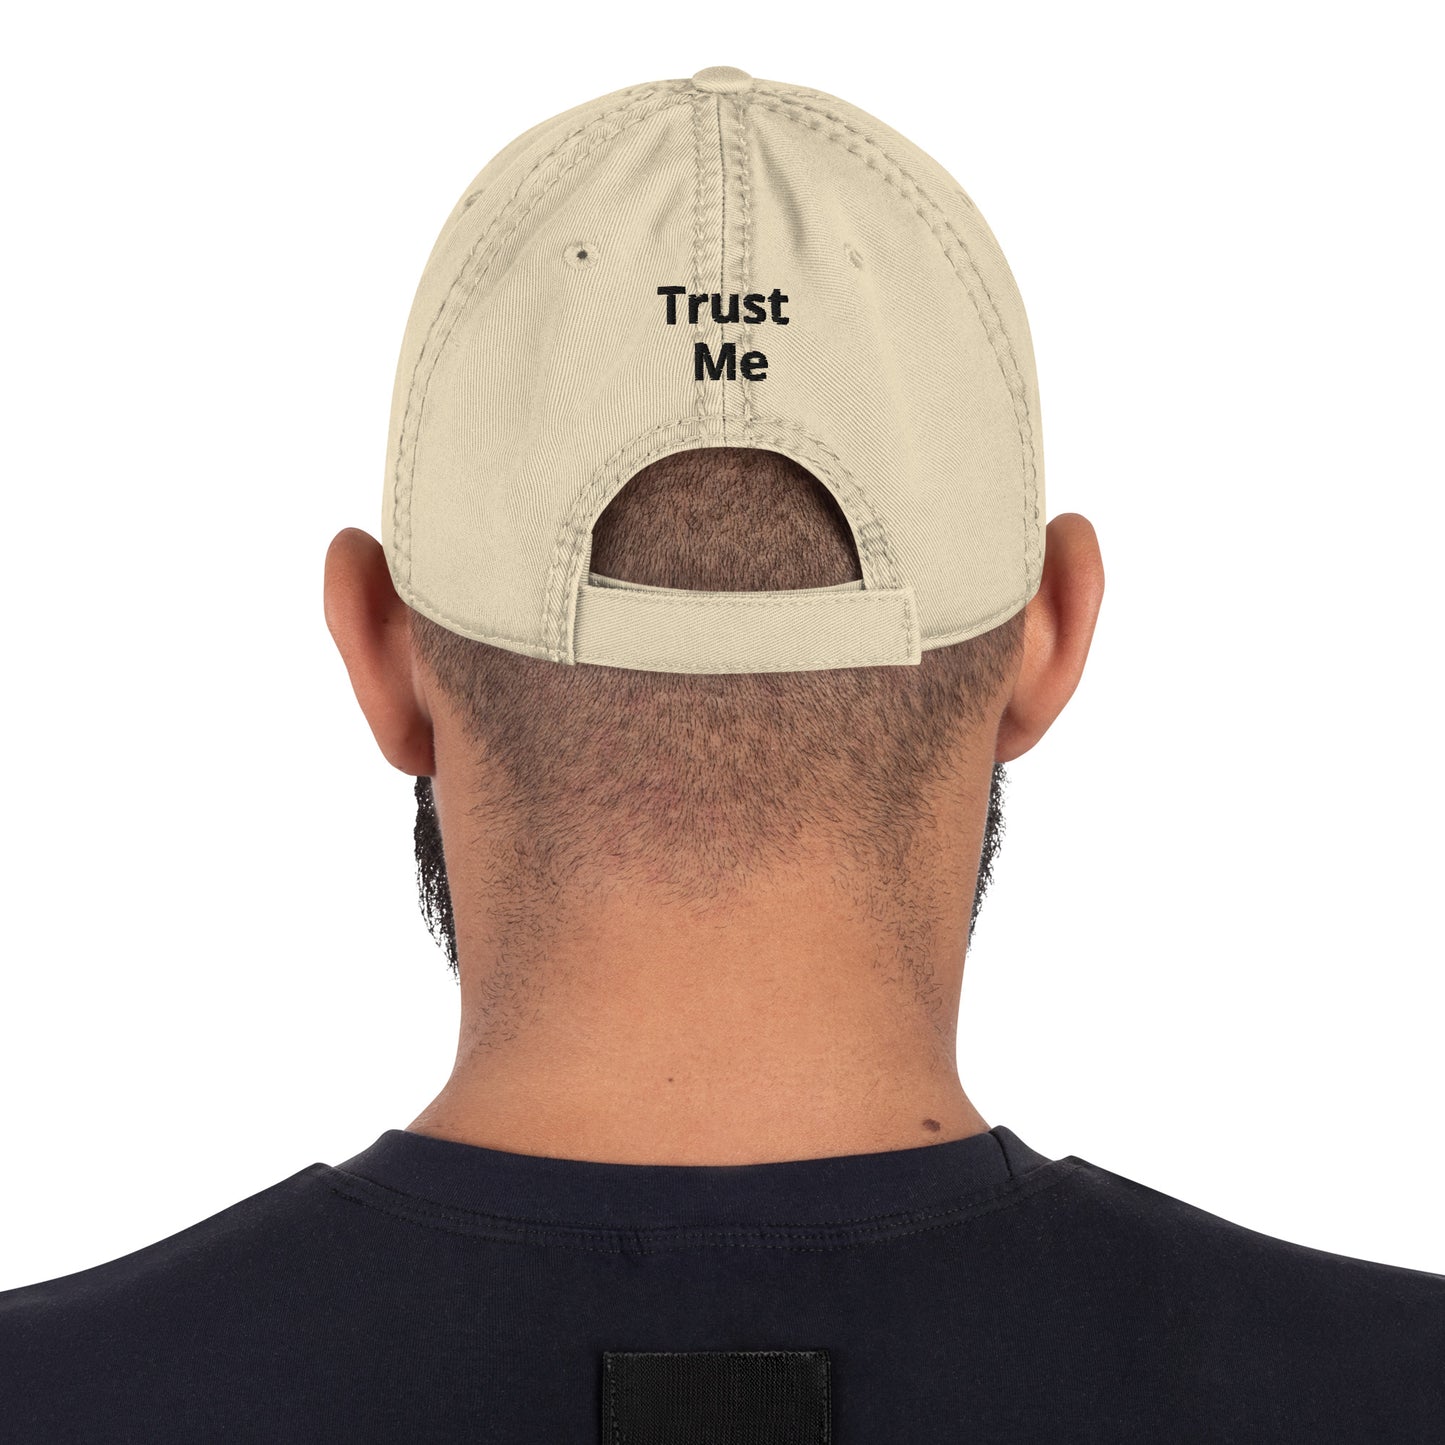 God Said "Trust Me" Distressed Dad Hat